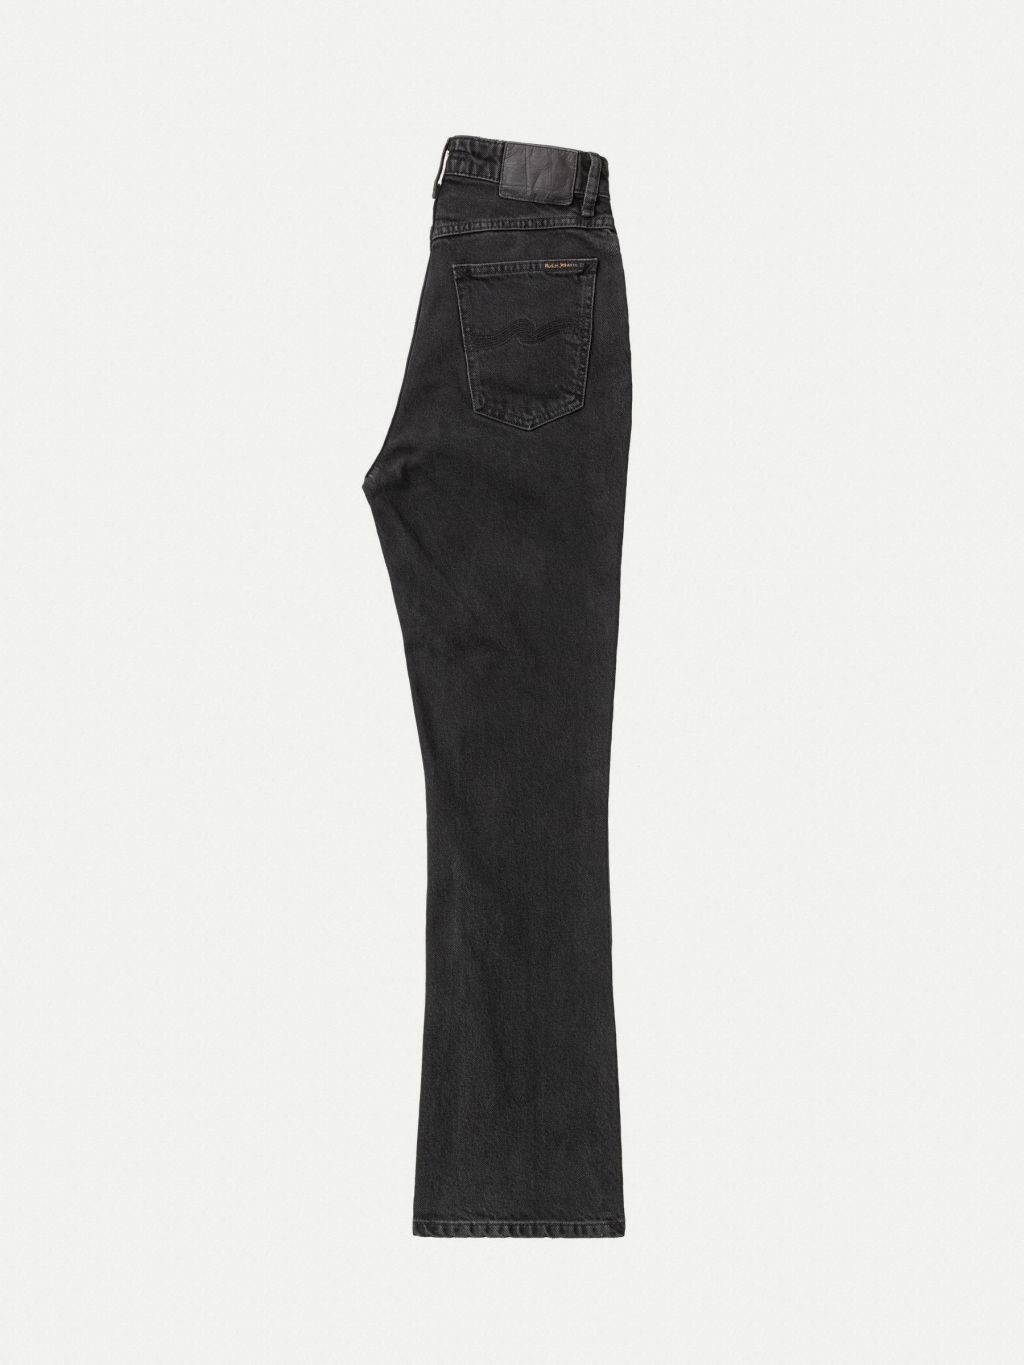 Rowdy Ruth High Waist Jeans - Almost Black 31/30